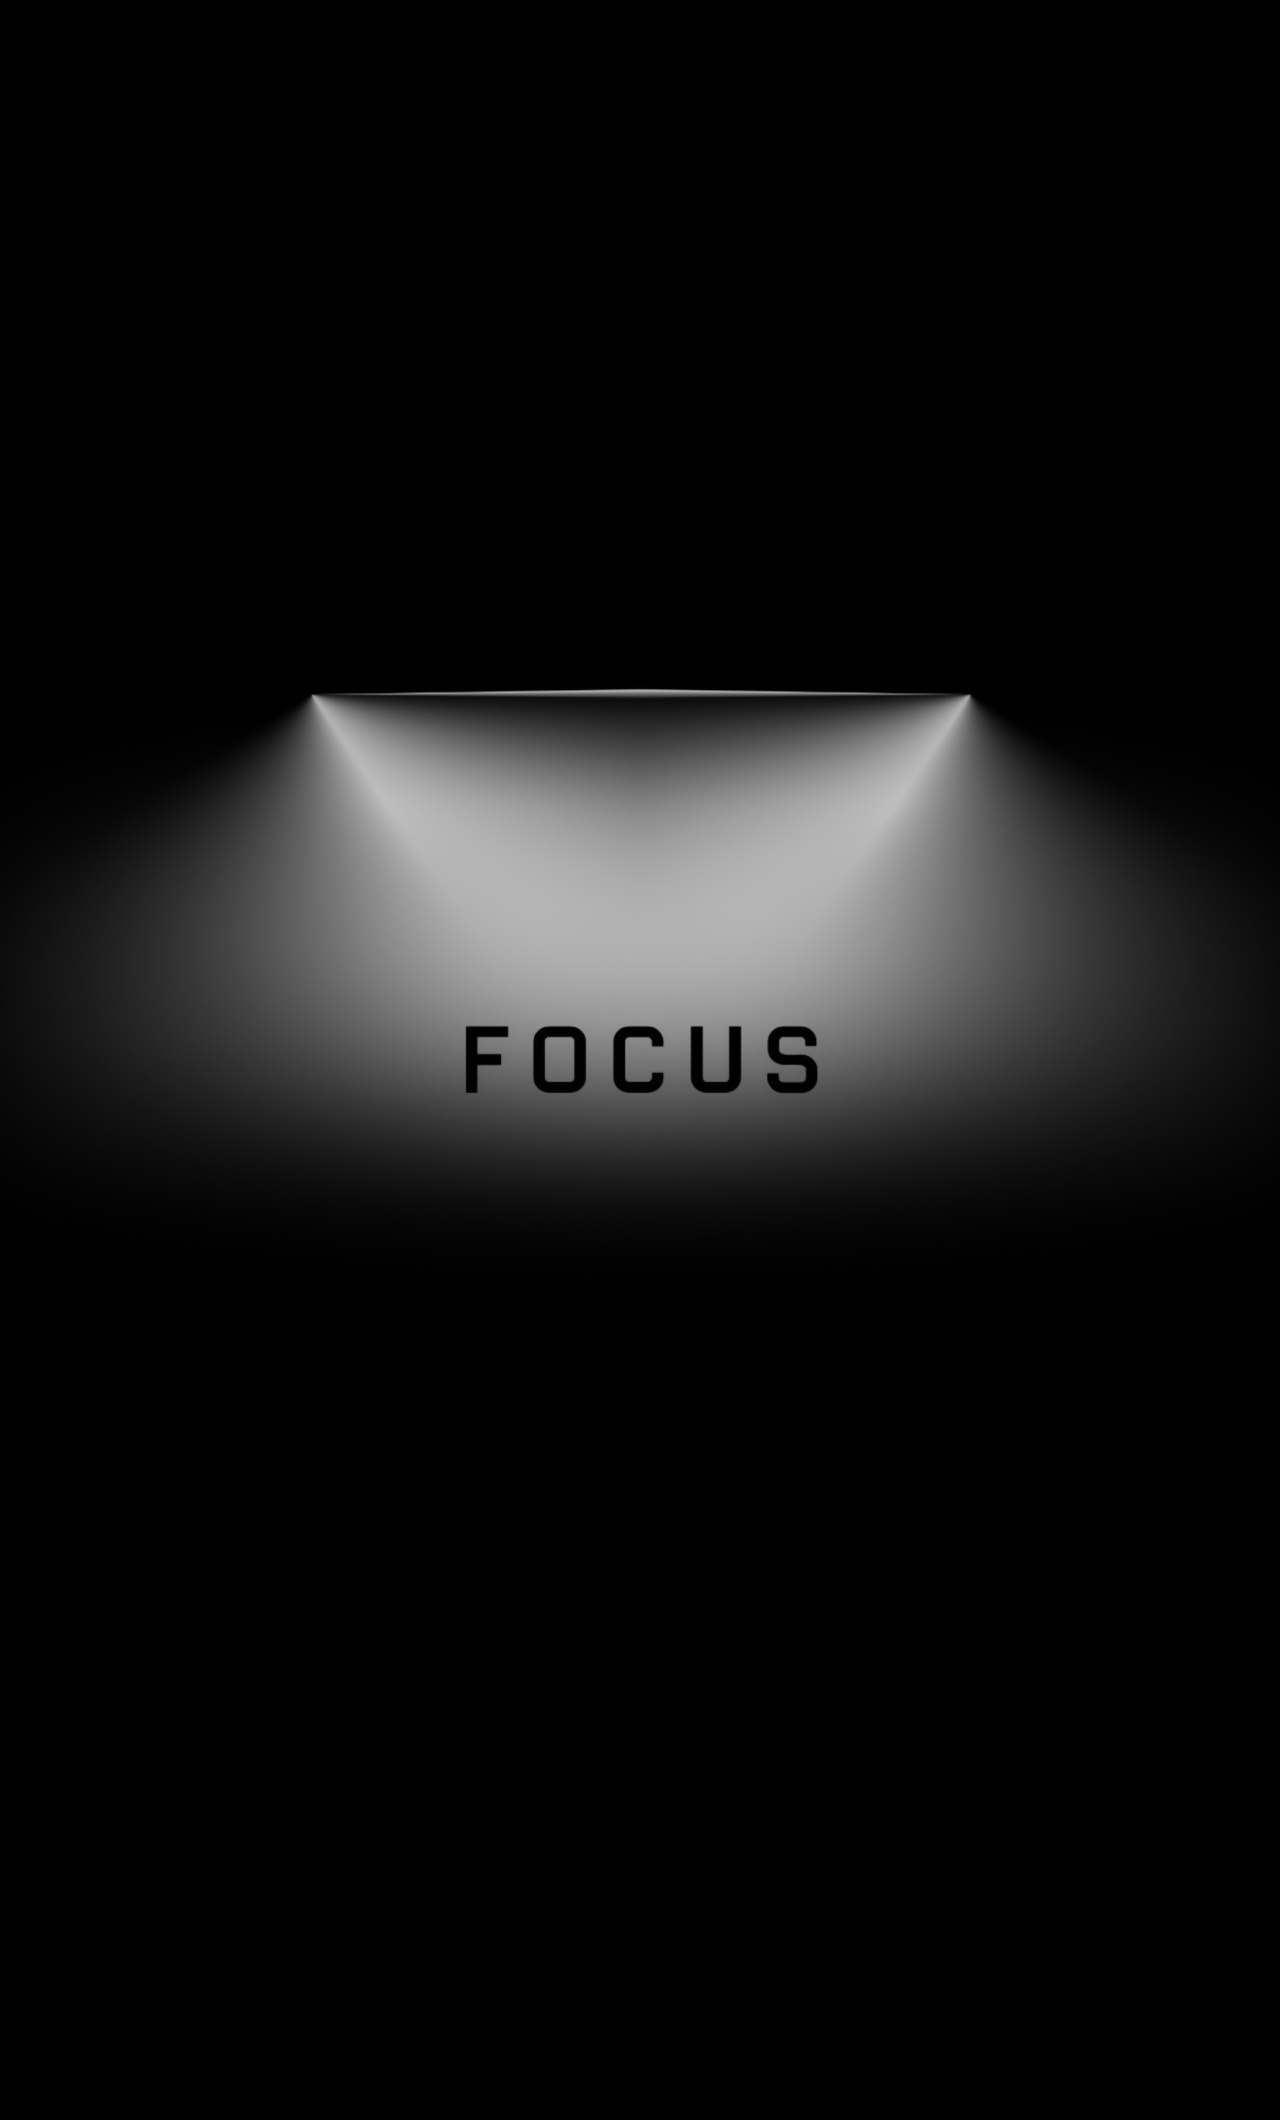 focus wallpaper hd